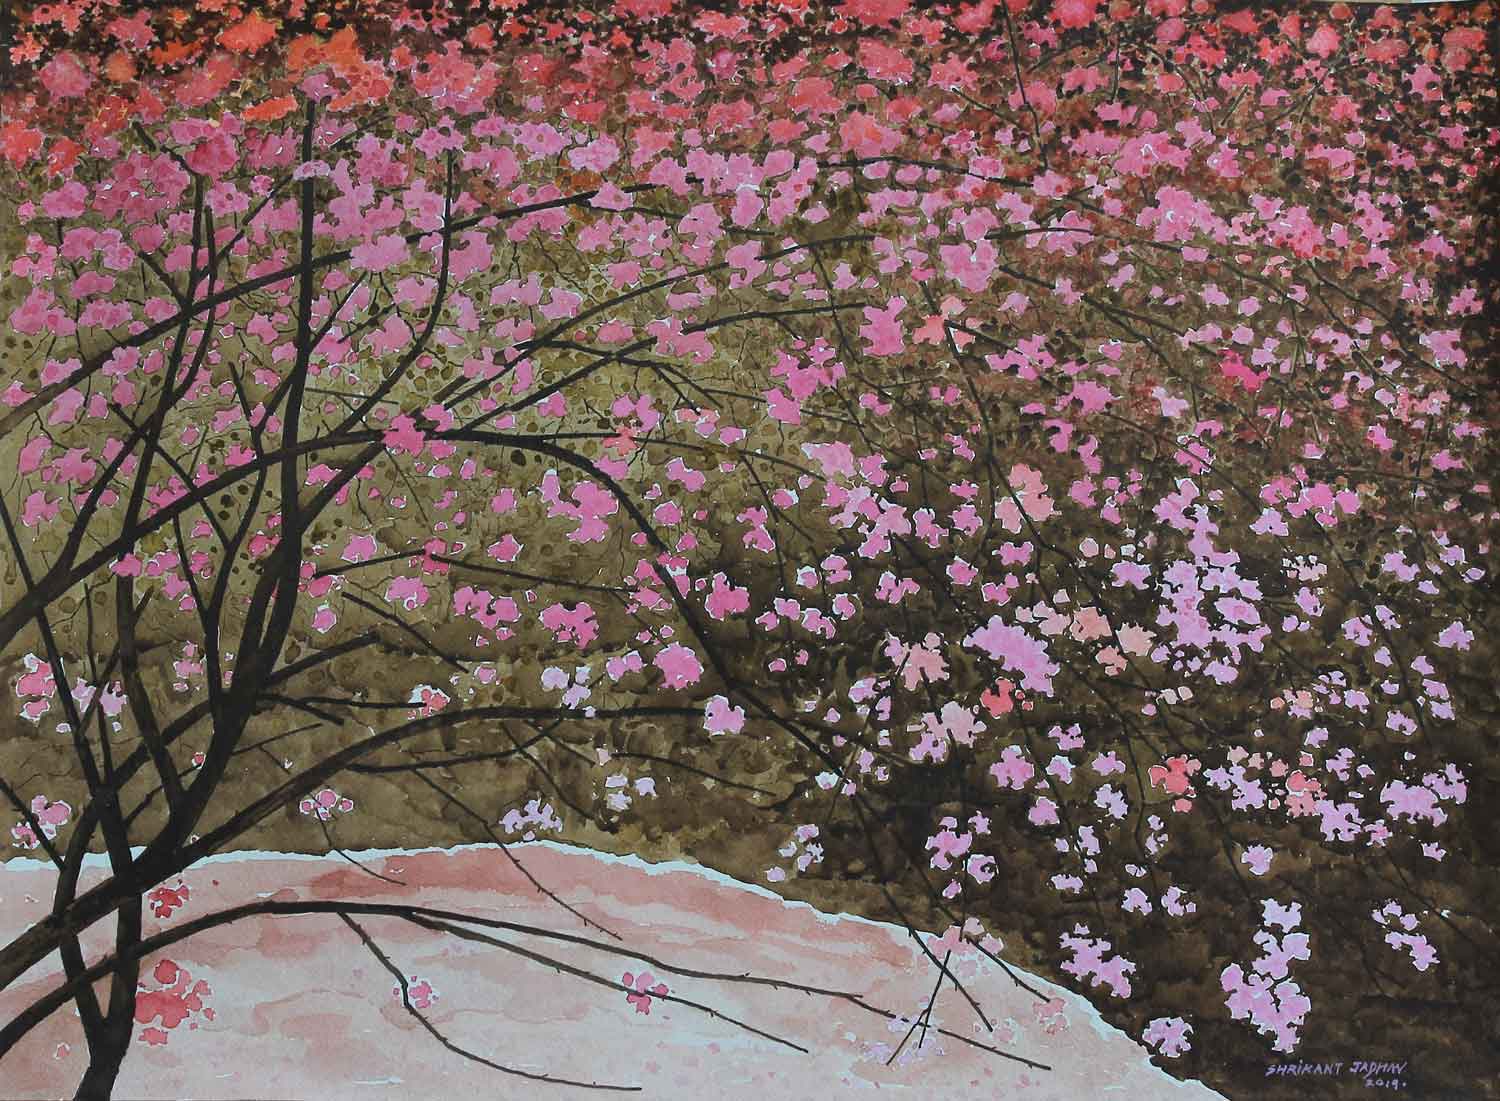 Realism Painting with Acrylic on Canvas "Pink Blossom" art by Shrikant Gajanan Jadhav